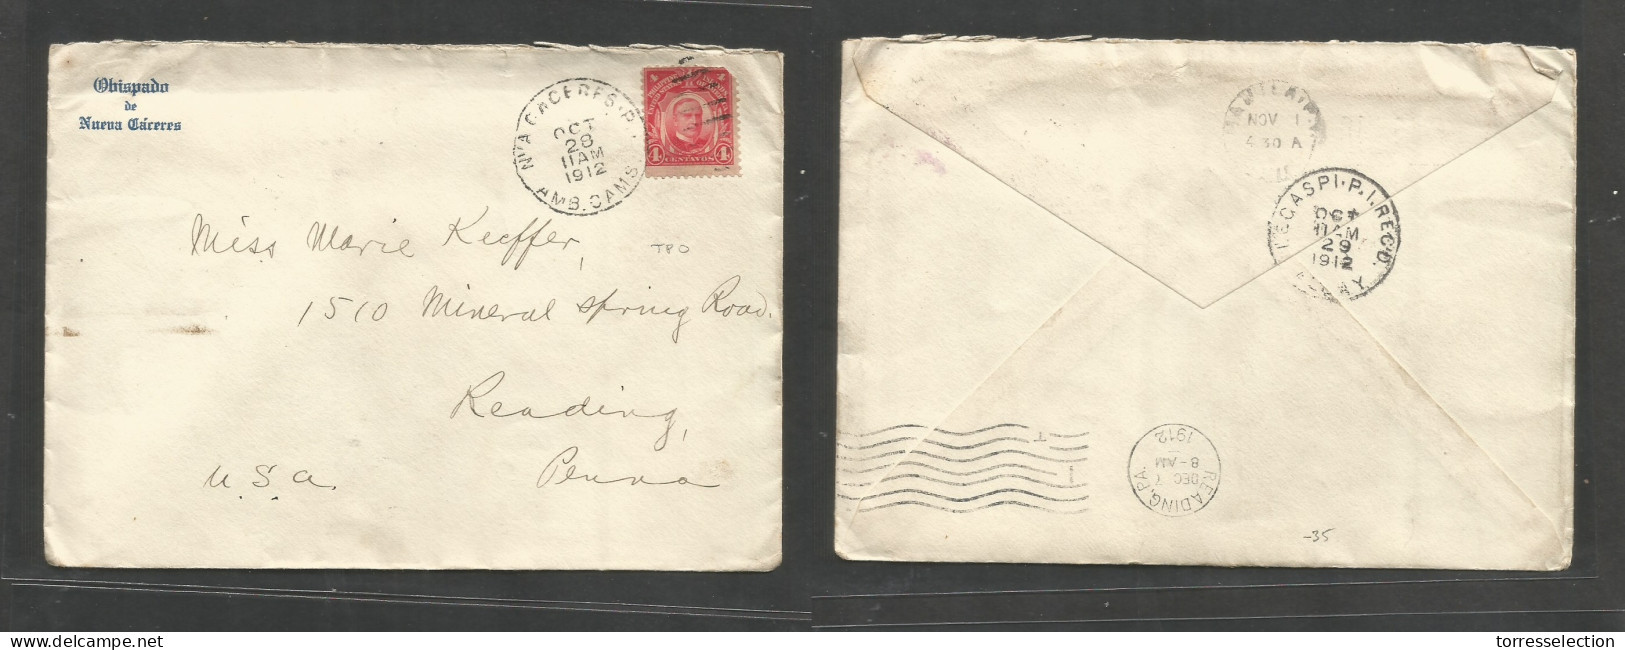 PHILIPPINES. 1912 (Oct 28) Nueva Caceres, Aub Cams - USA, Reading, PA (Dec 7) Obispado Fkd Envelope, TPO Cds. Reverse Tr - Philippinen